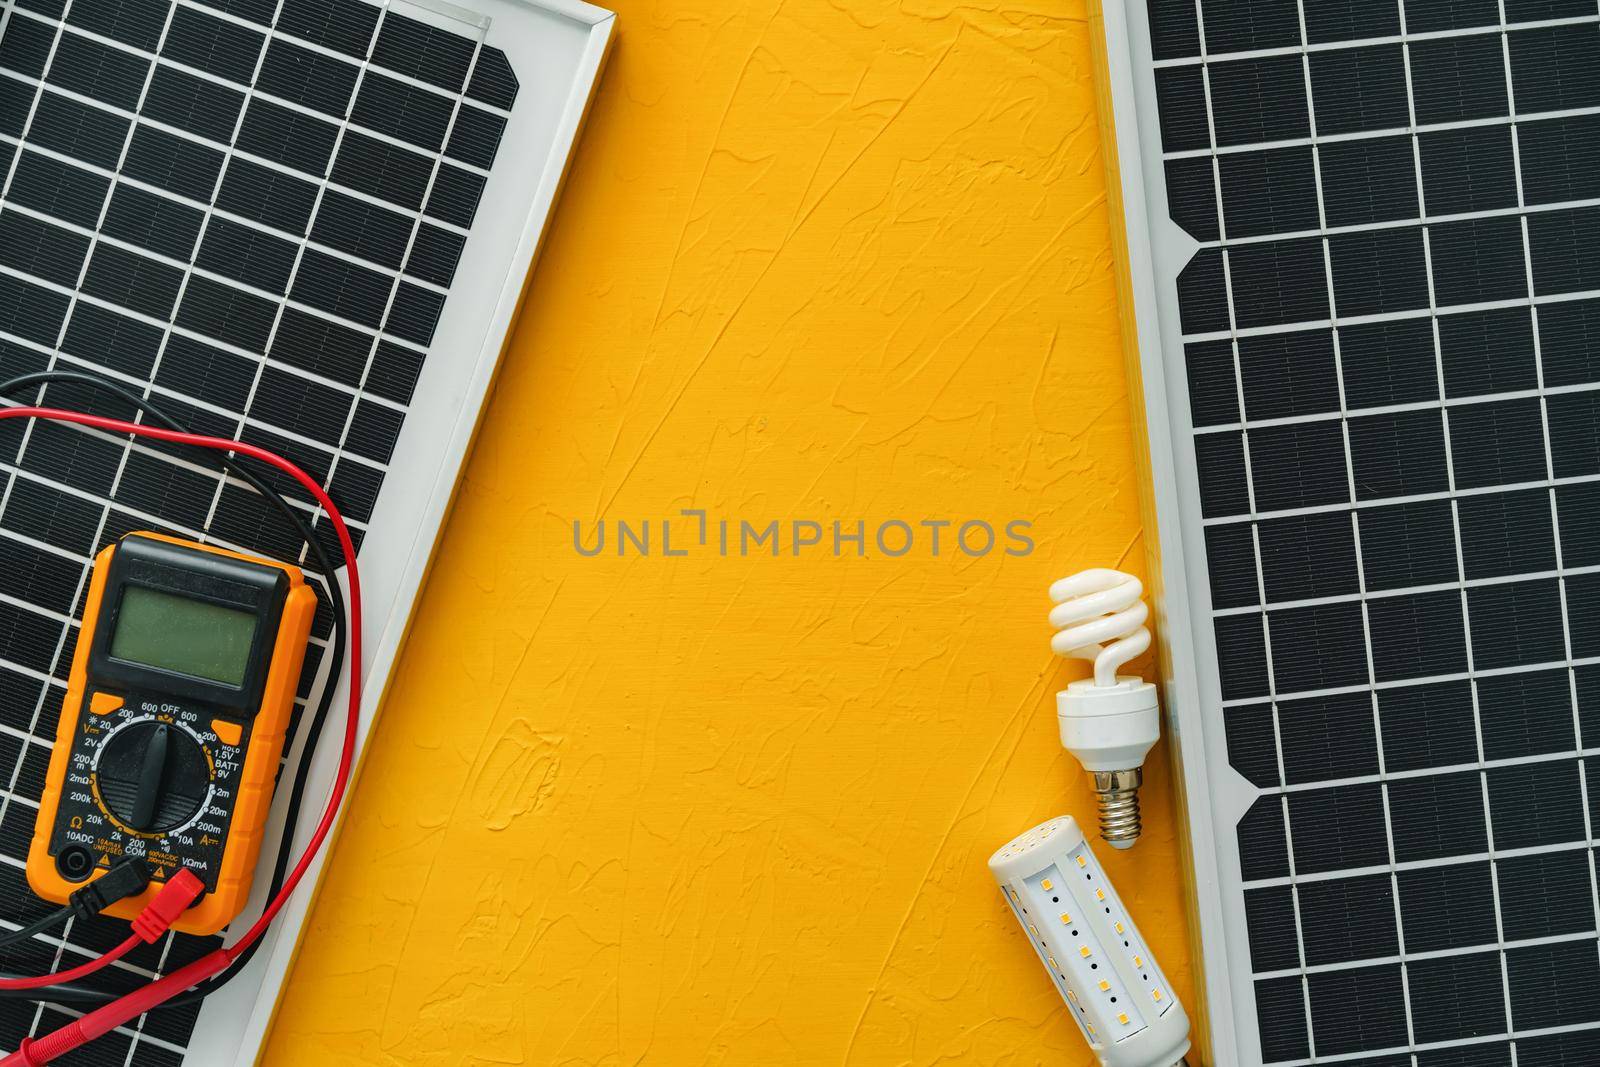 Alternative energy solar power panel close up by Fabrikasimf